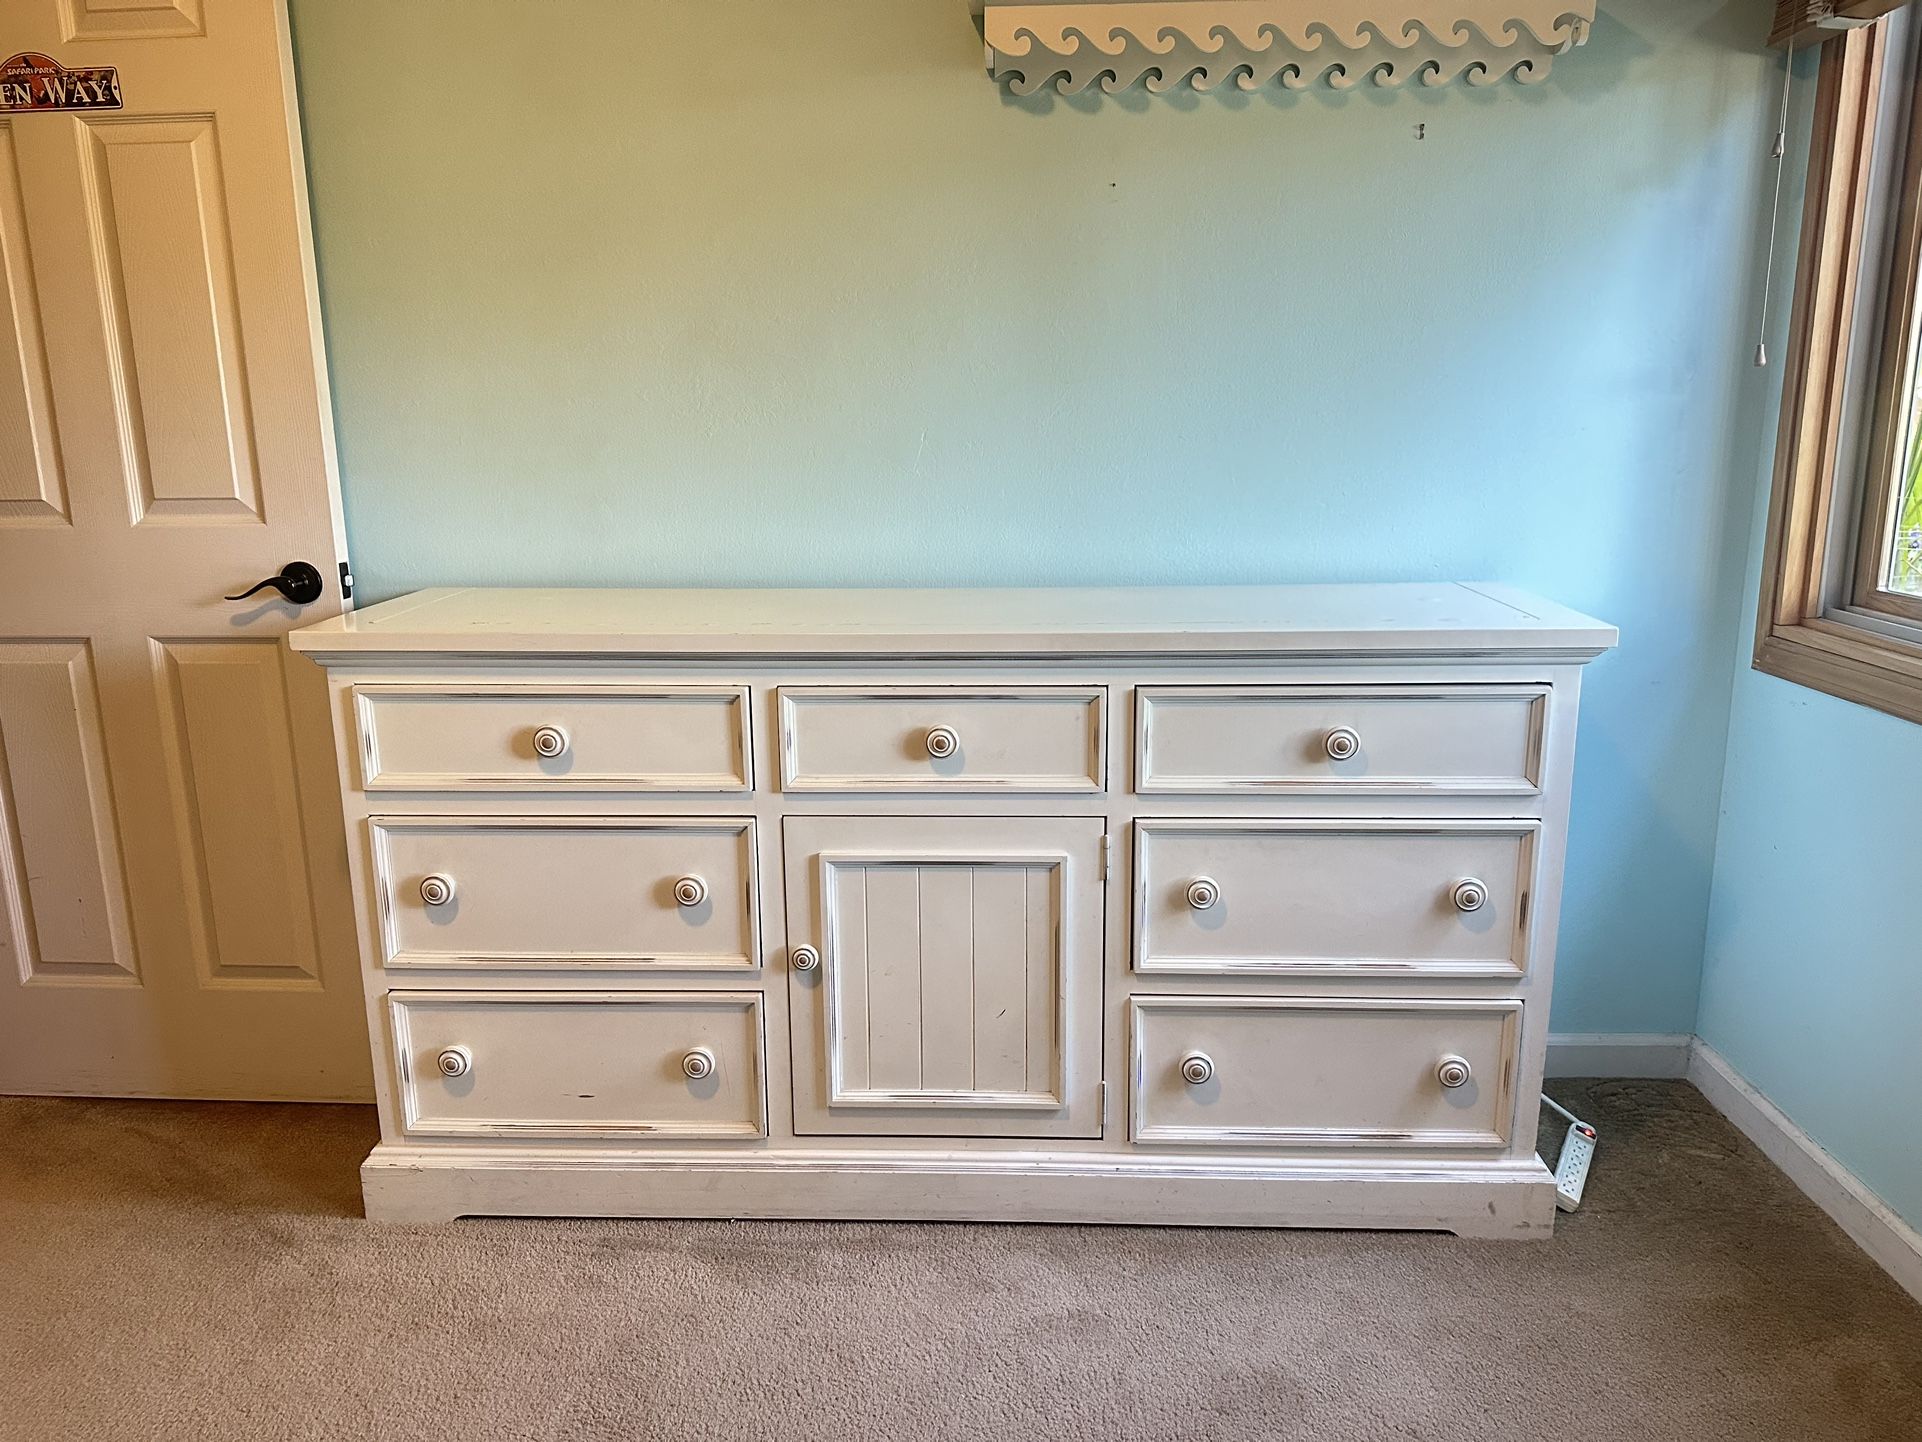 White Dresser, Solid Wood! 